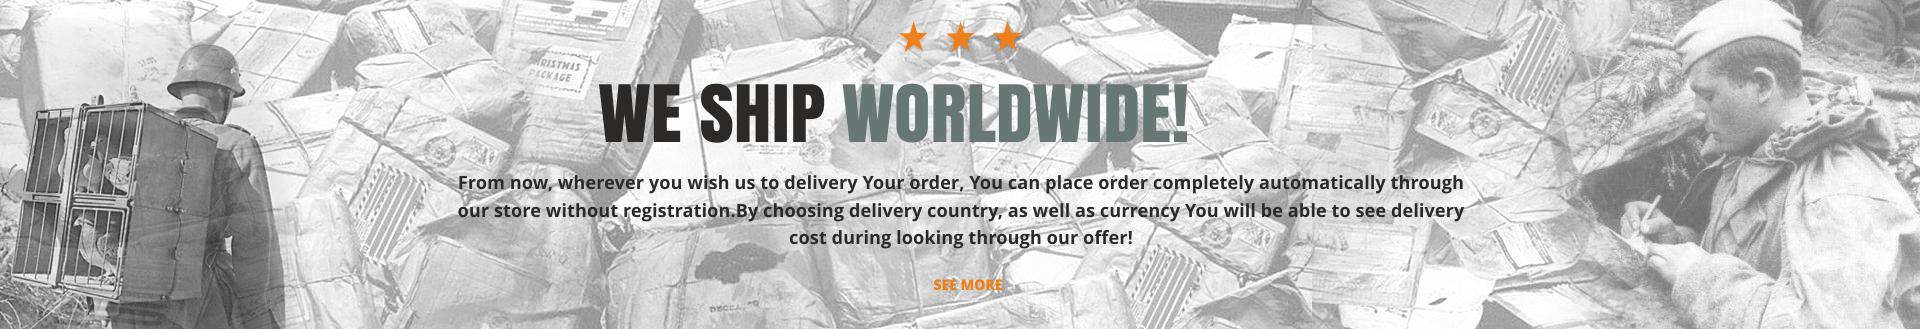 We ship worldwide